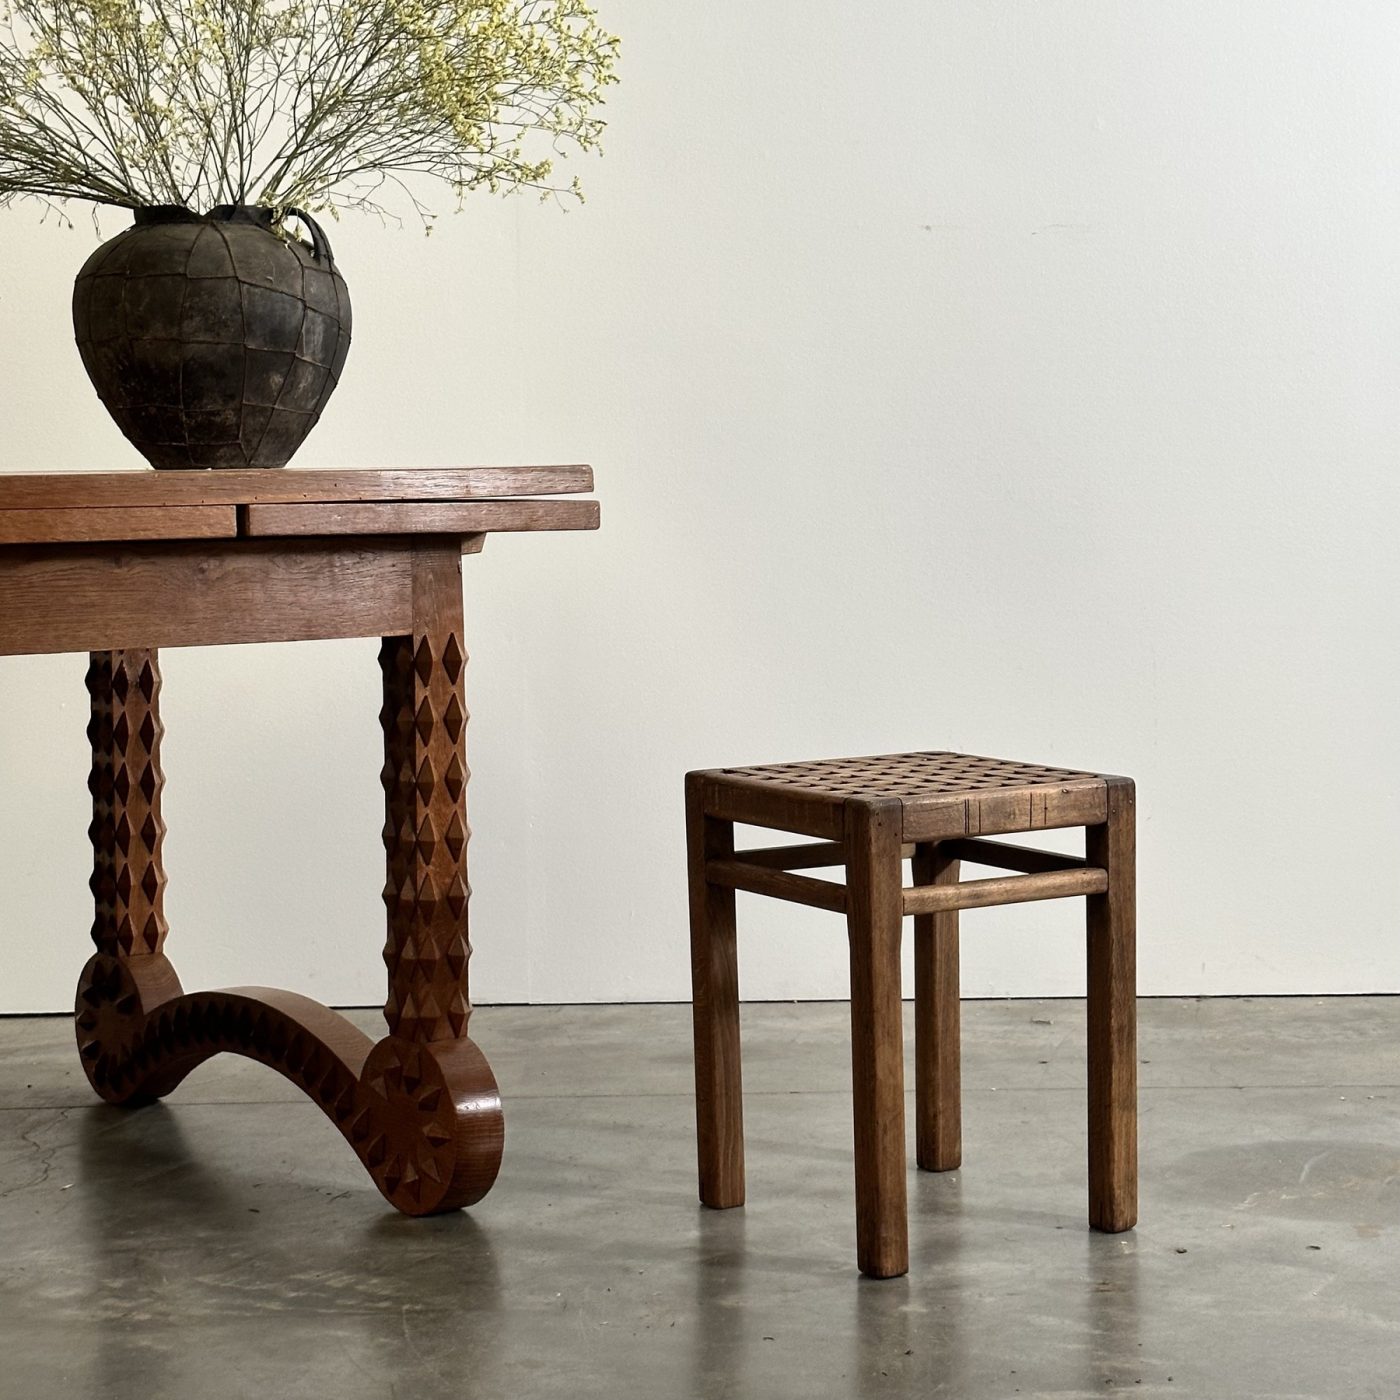 objet-vagabond-renegabriel-stool0000